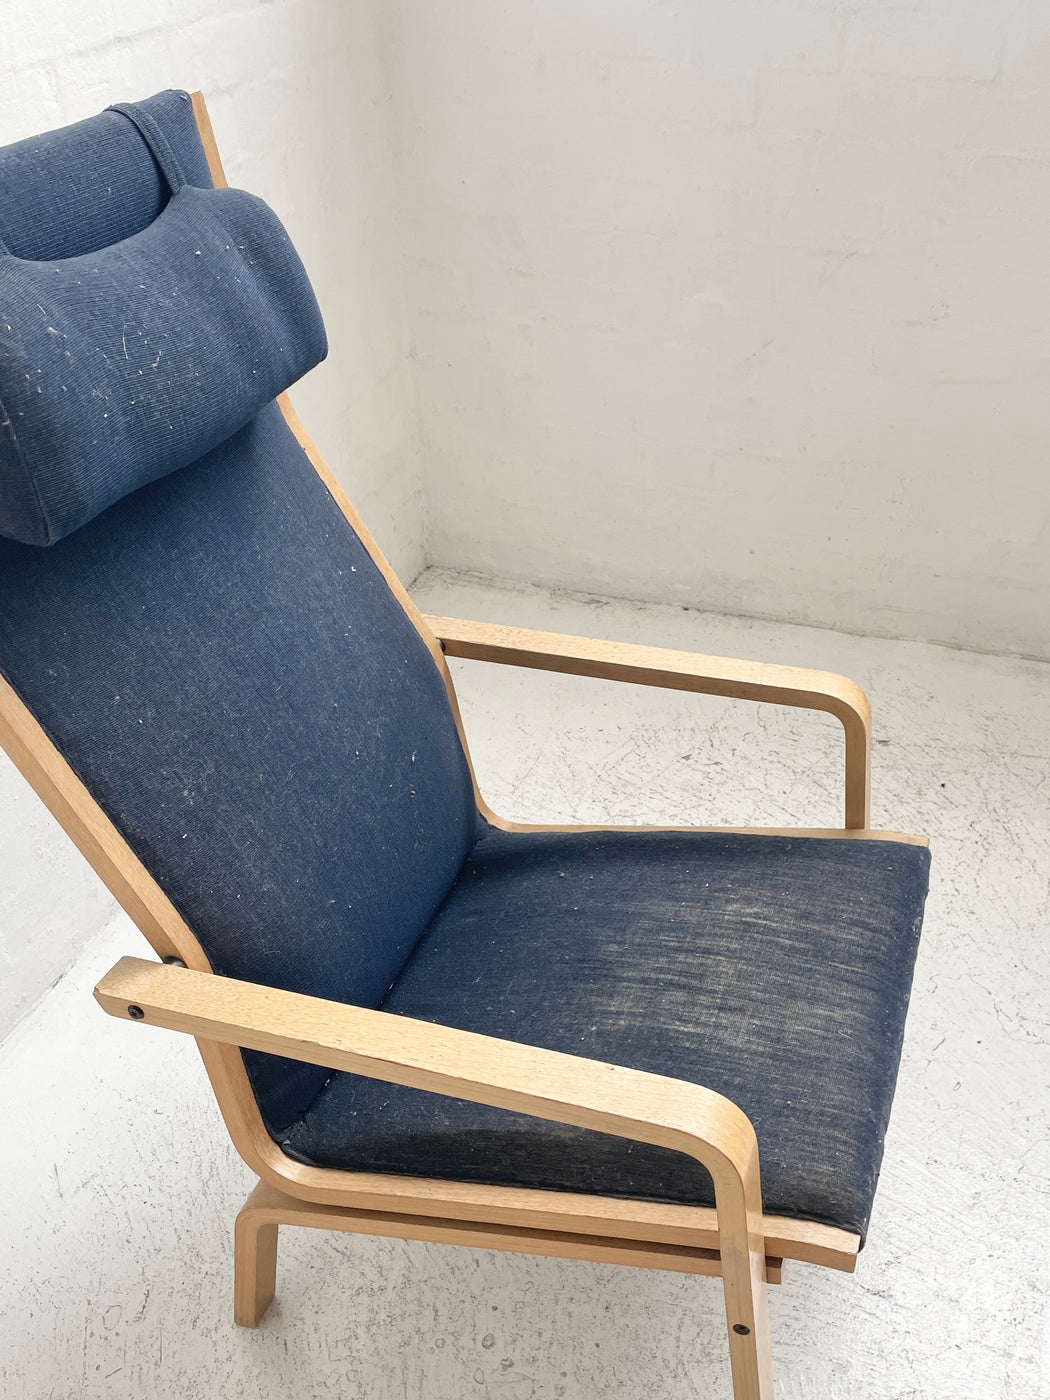 Arne Jacobsen 'St Catherine's' Chair